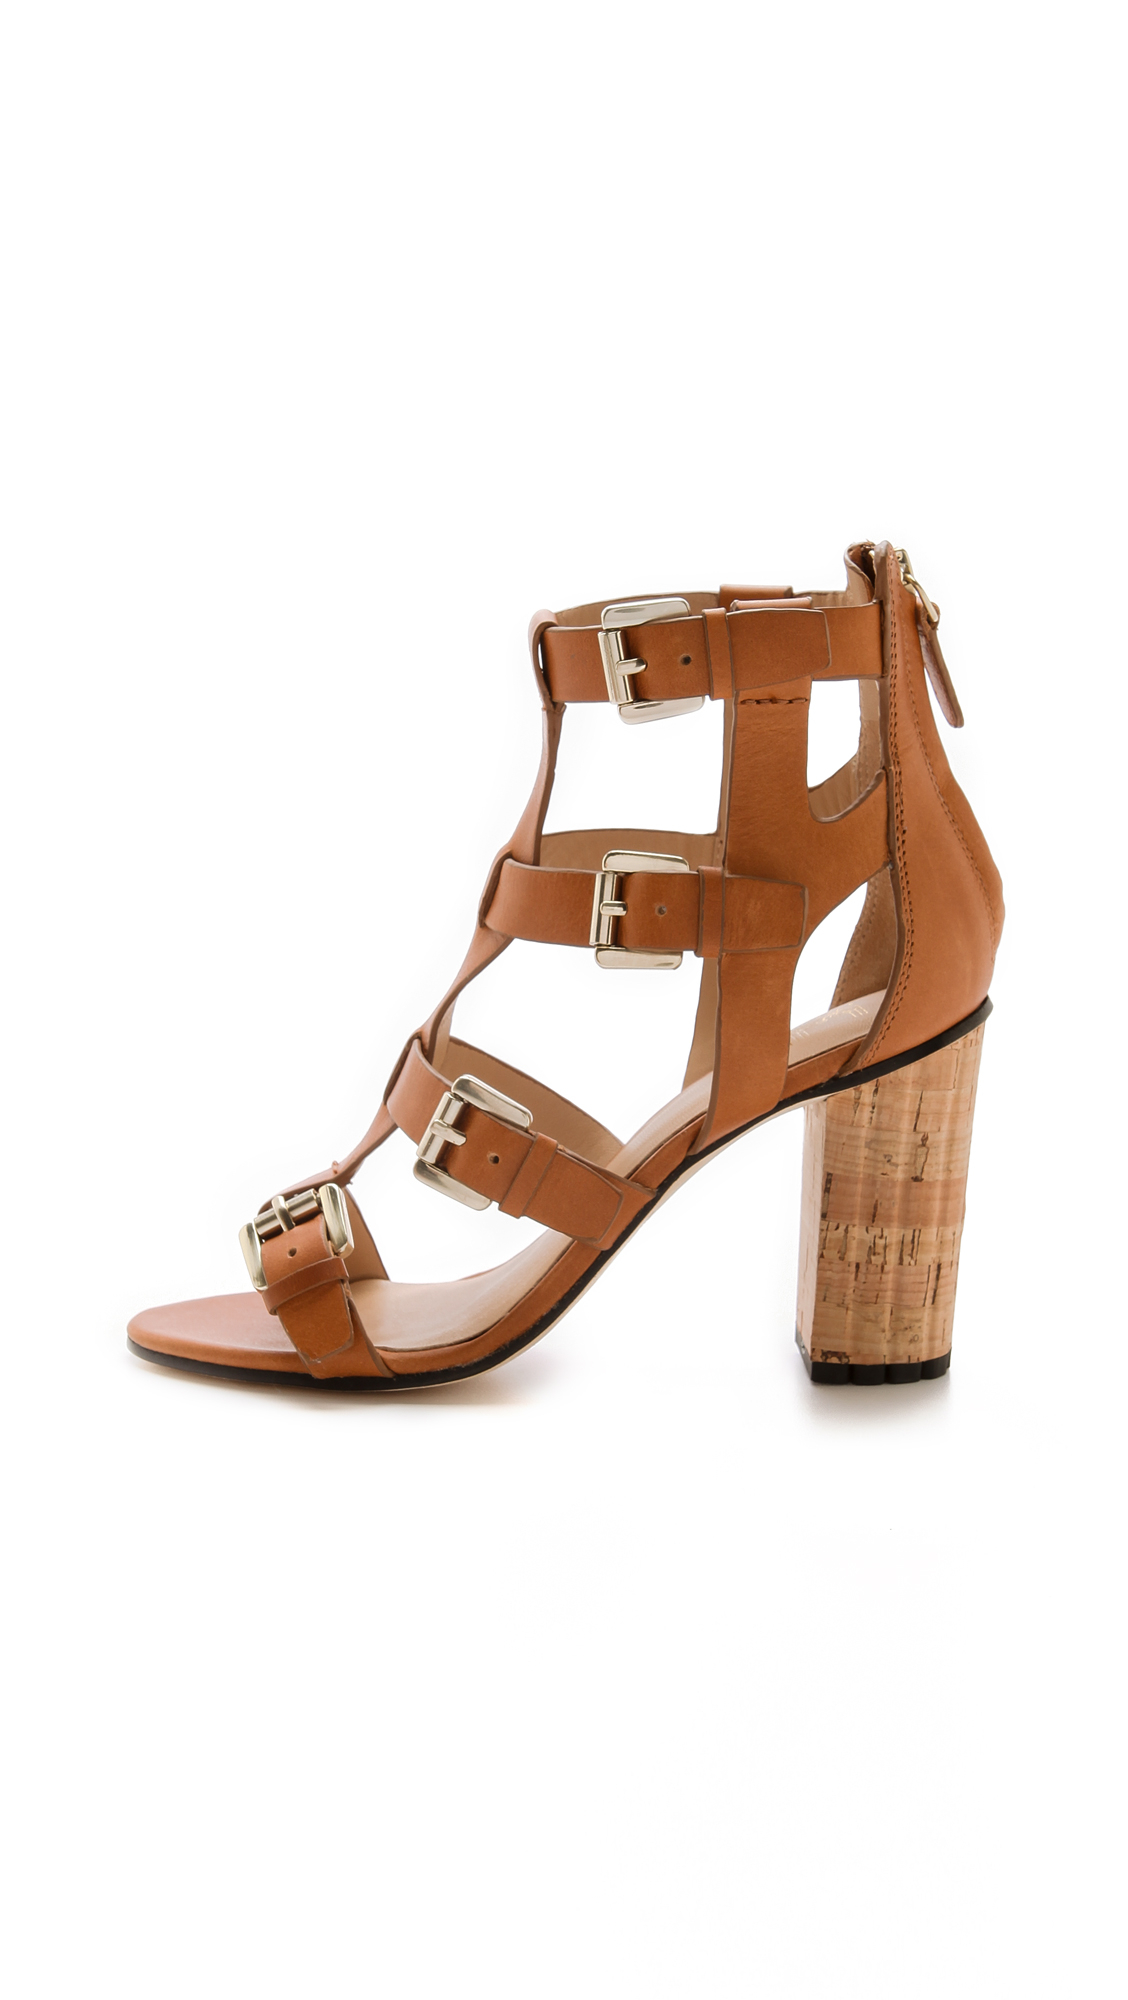 Lyst - Belle By Sigerson Morrison Fuller Gladiator Sandals in Brown